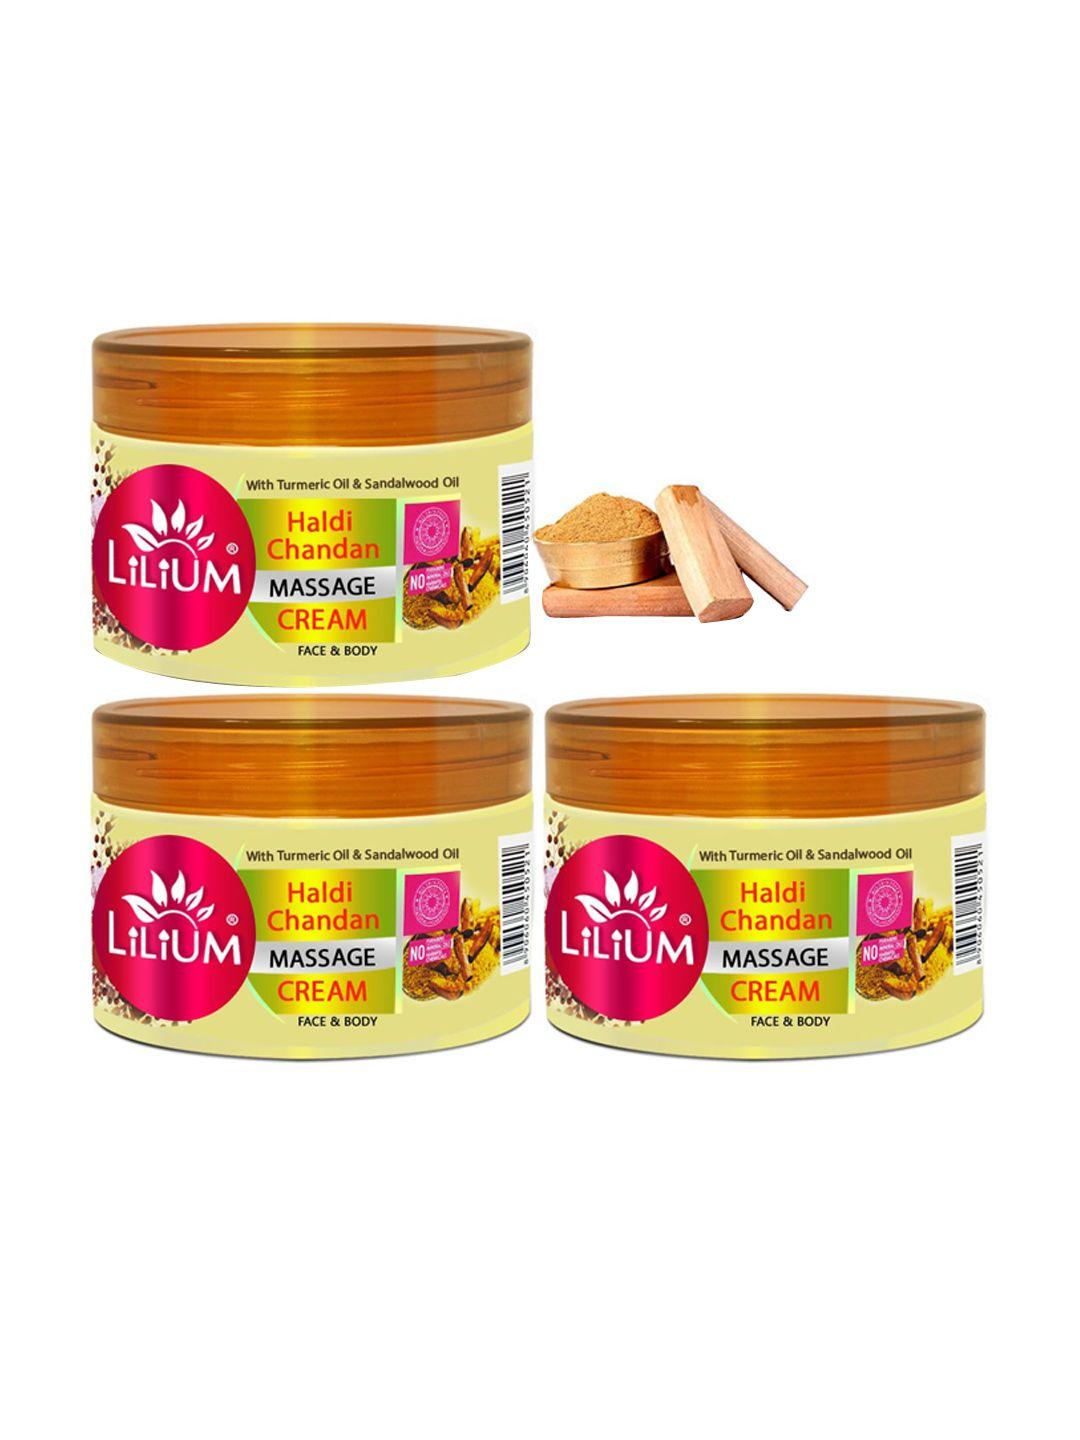 lilium set of 3 haldi chandan face & body massage cream with aloevera - 250 g each